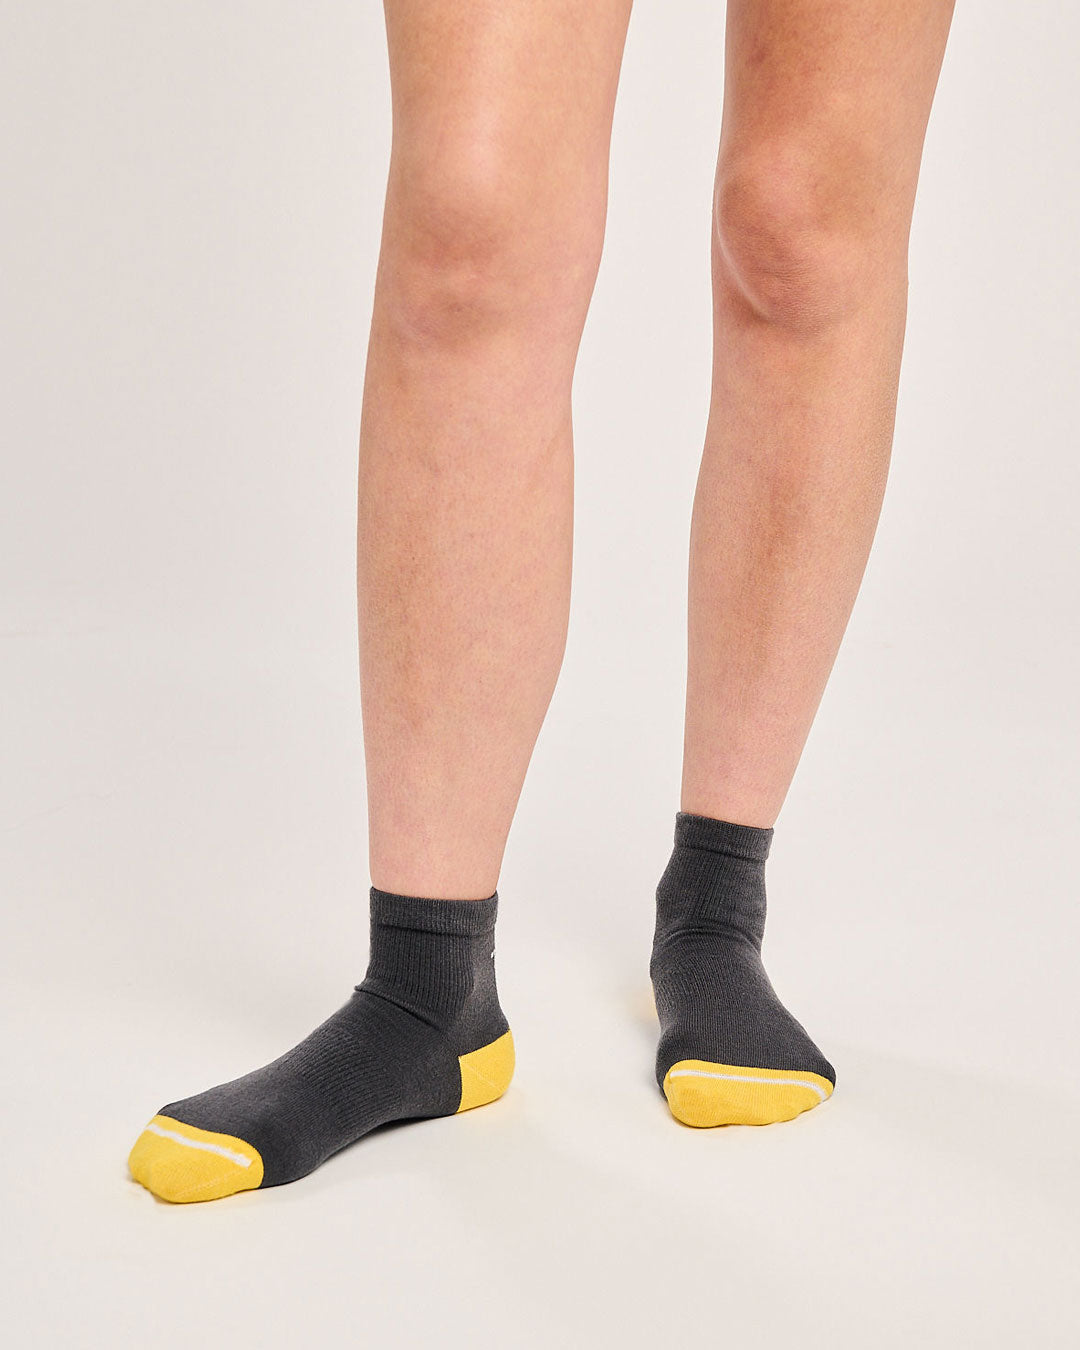 Seamless toe quarter length socks. Arch support socks. Made from recycled plastic bottles.